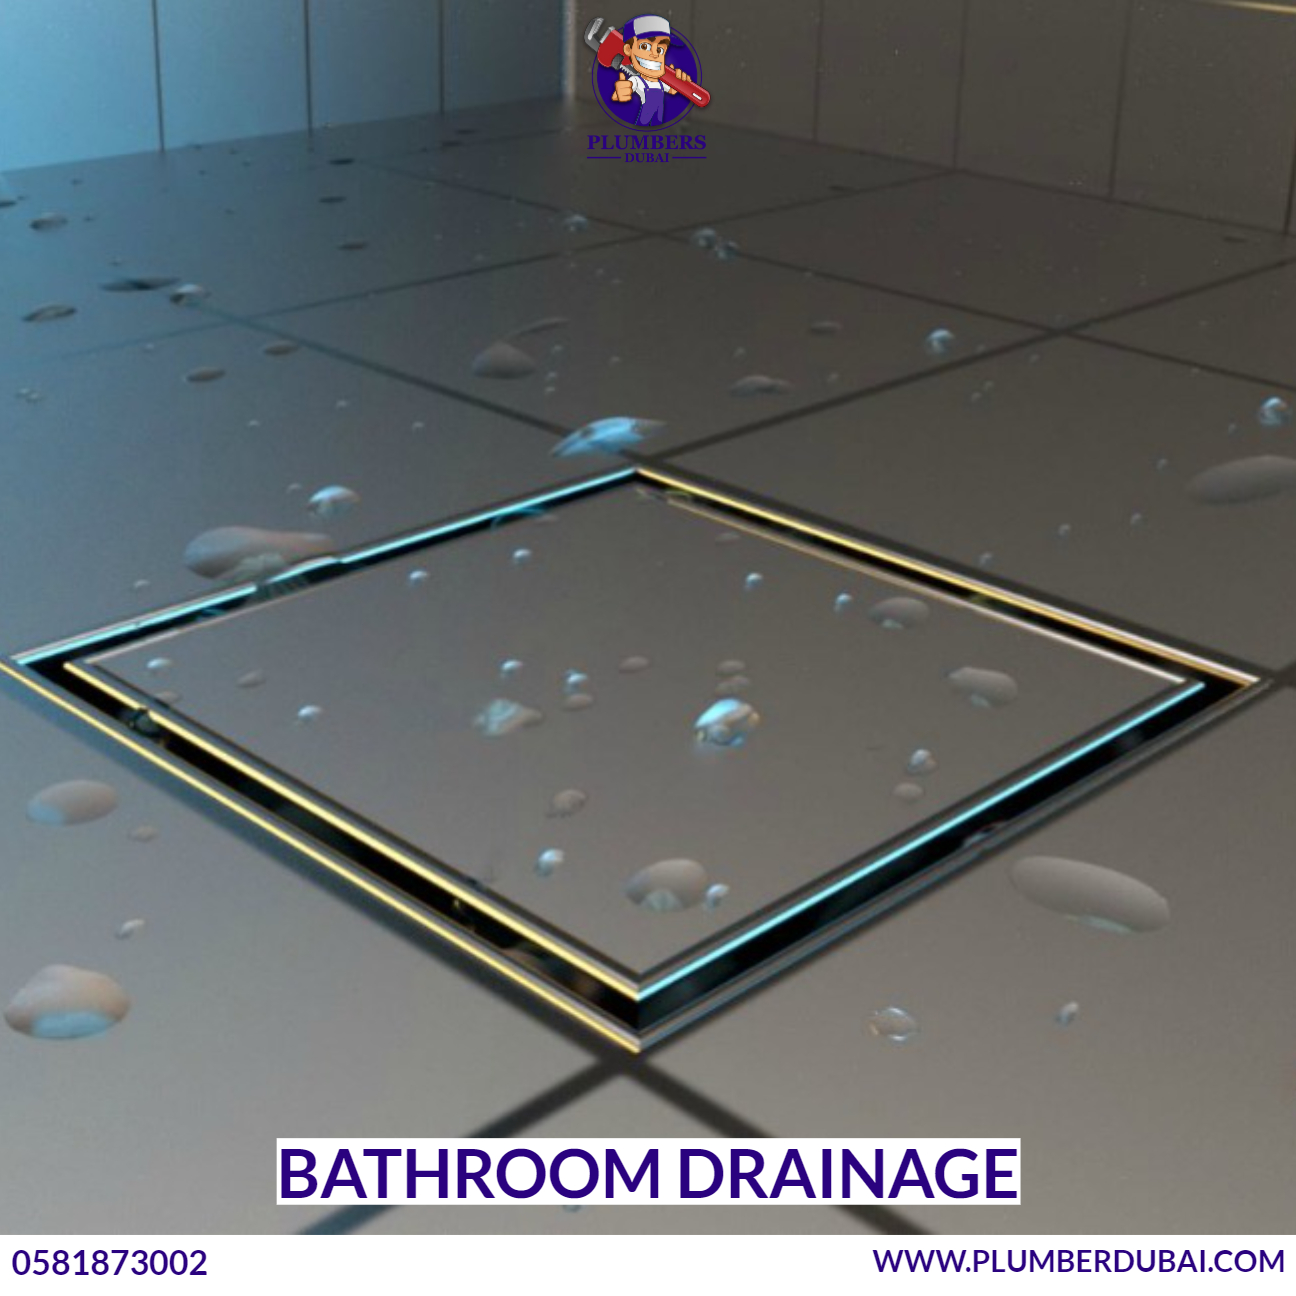 Bathroom drainage